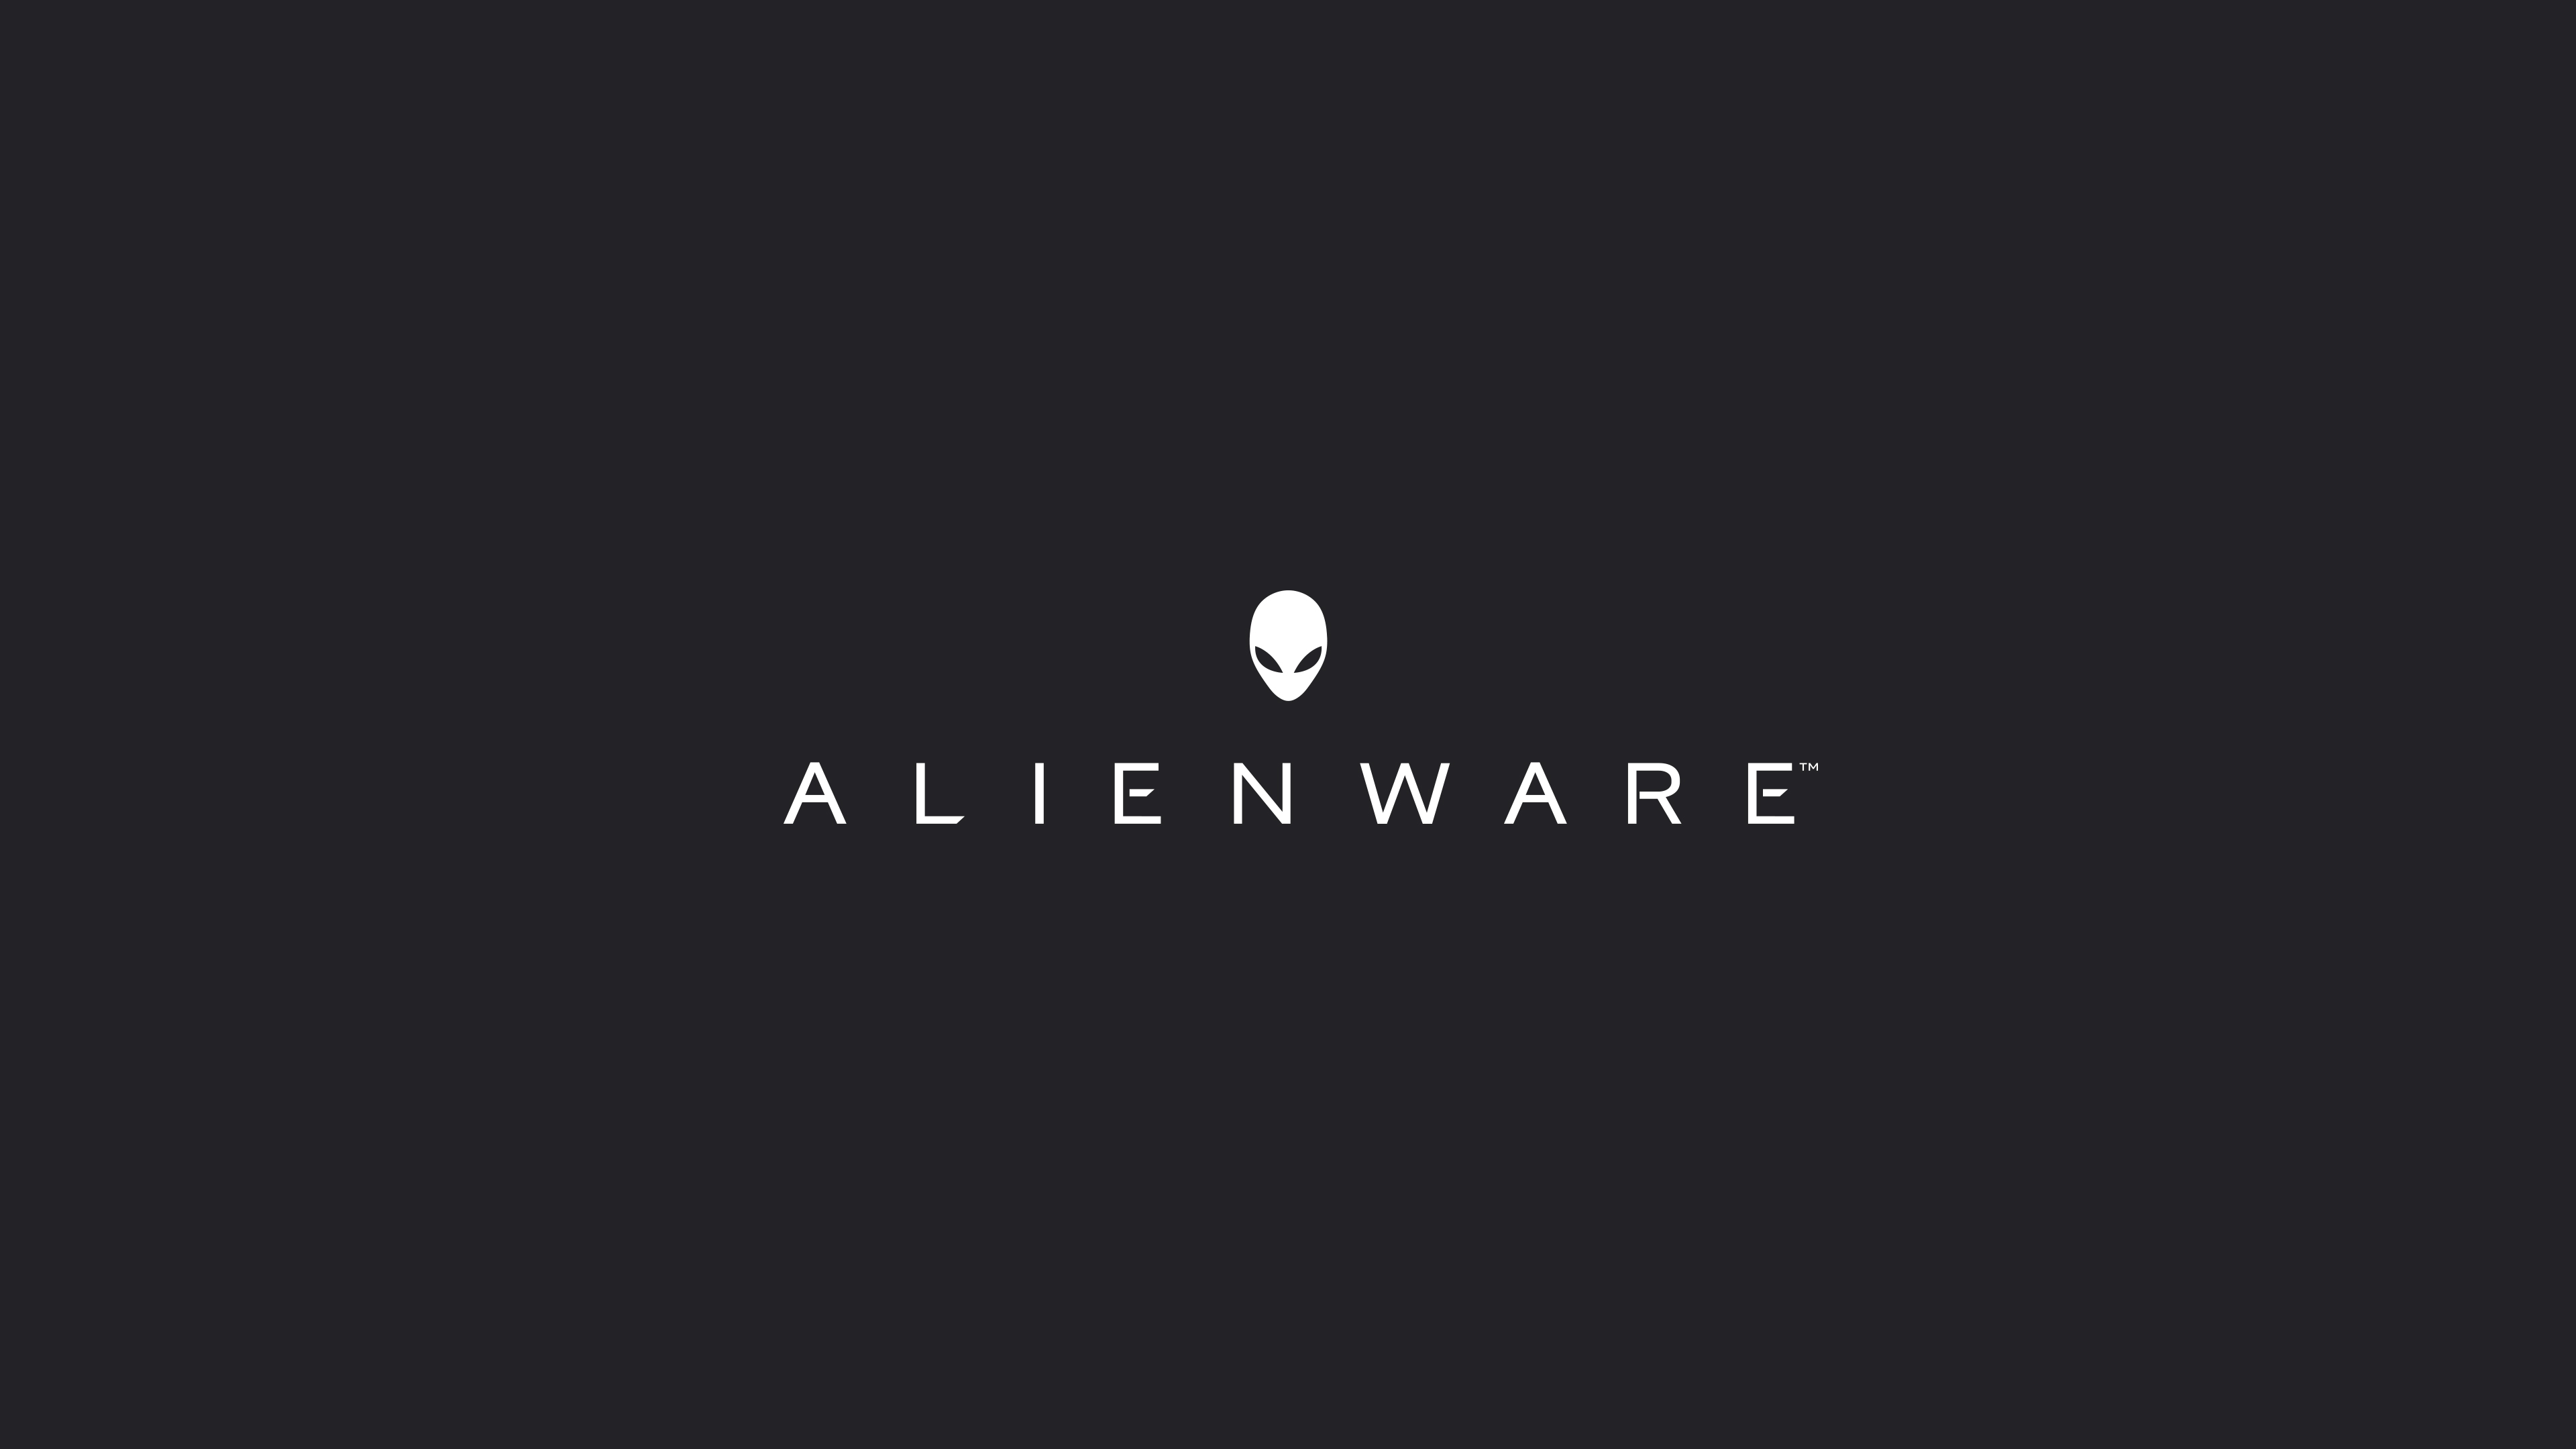 General 3840x2160 Alienware digital art minimalism simple background logo